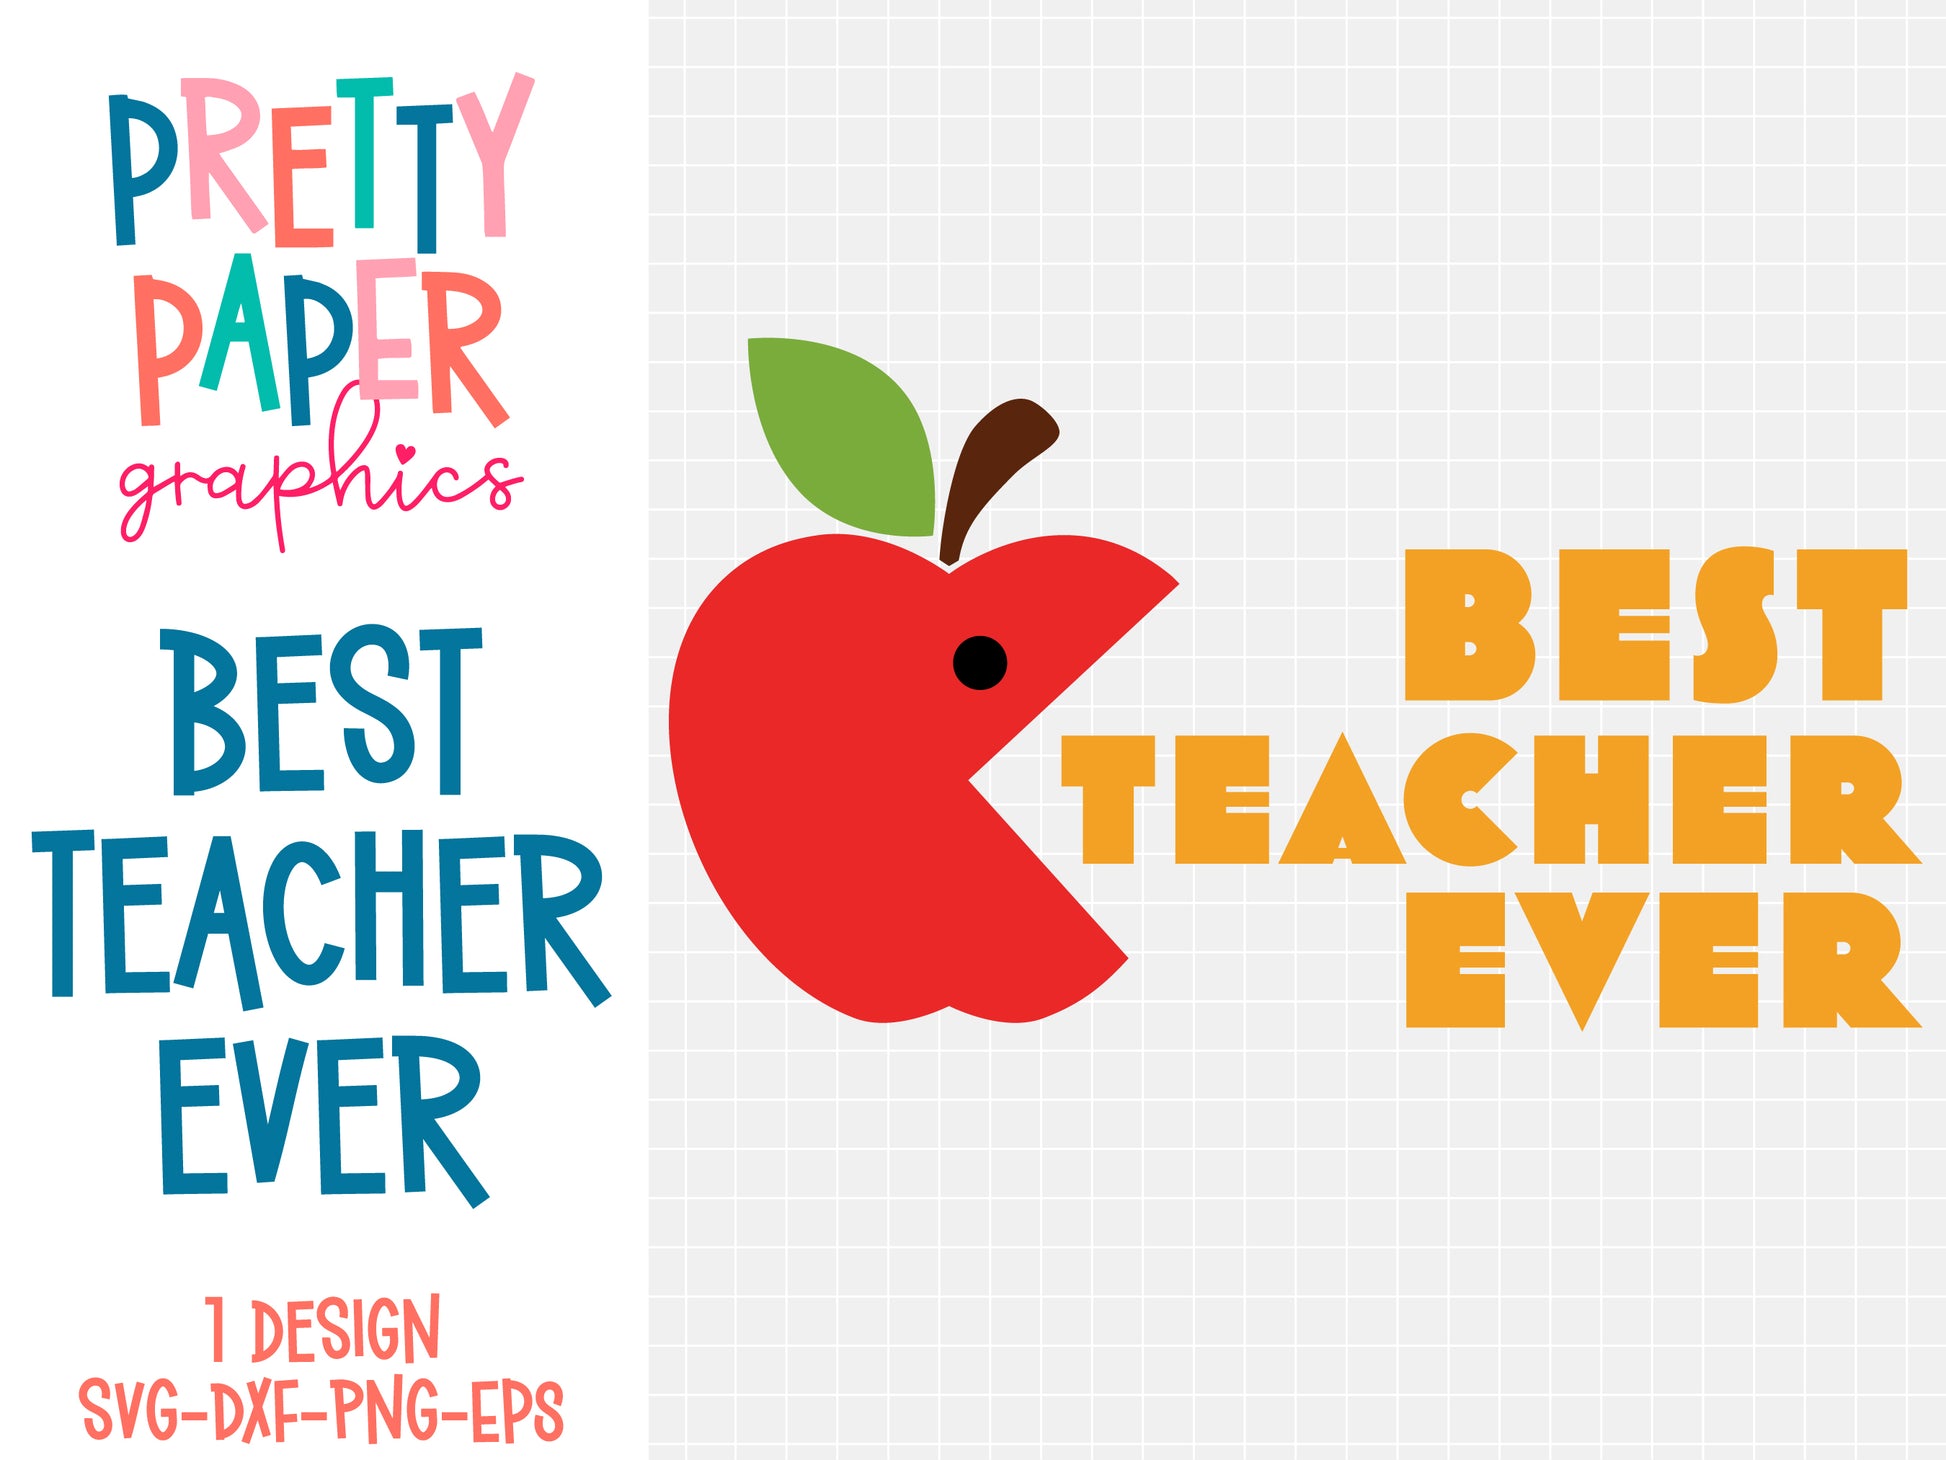 Best Teacher Ever SVG Cut File by Pretty Paper Graphics